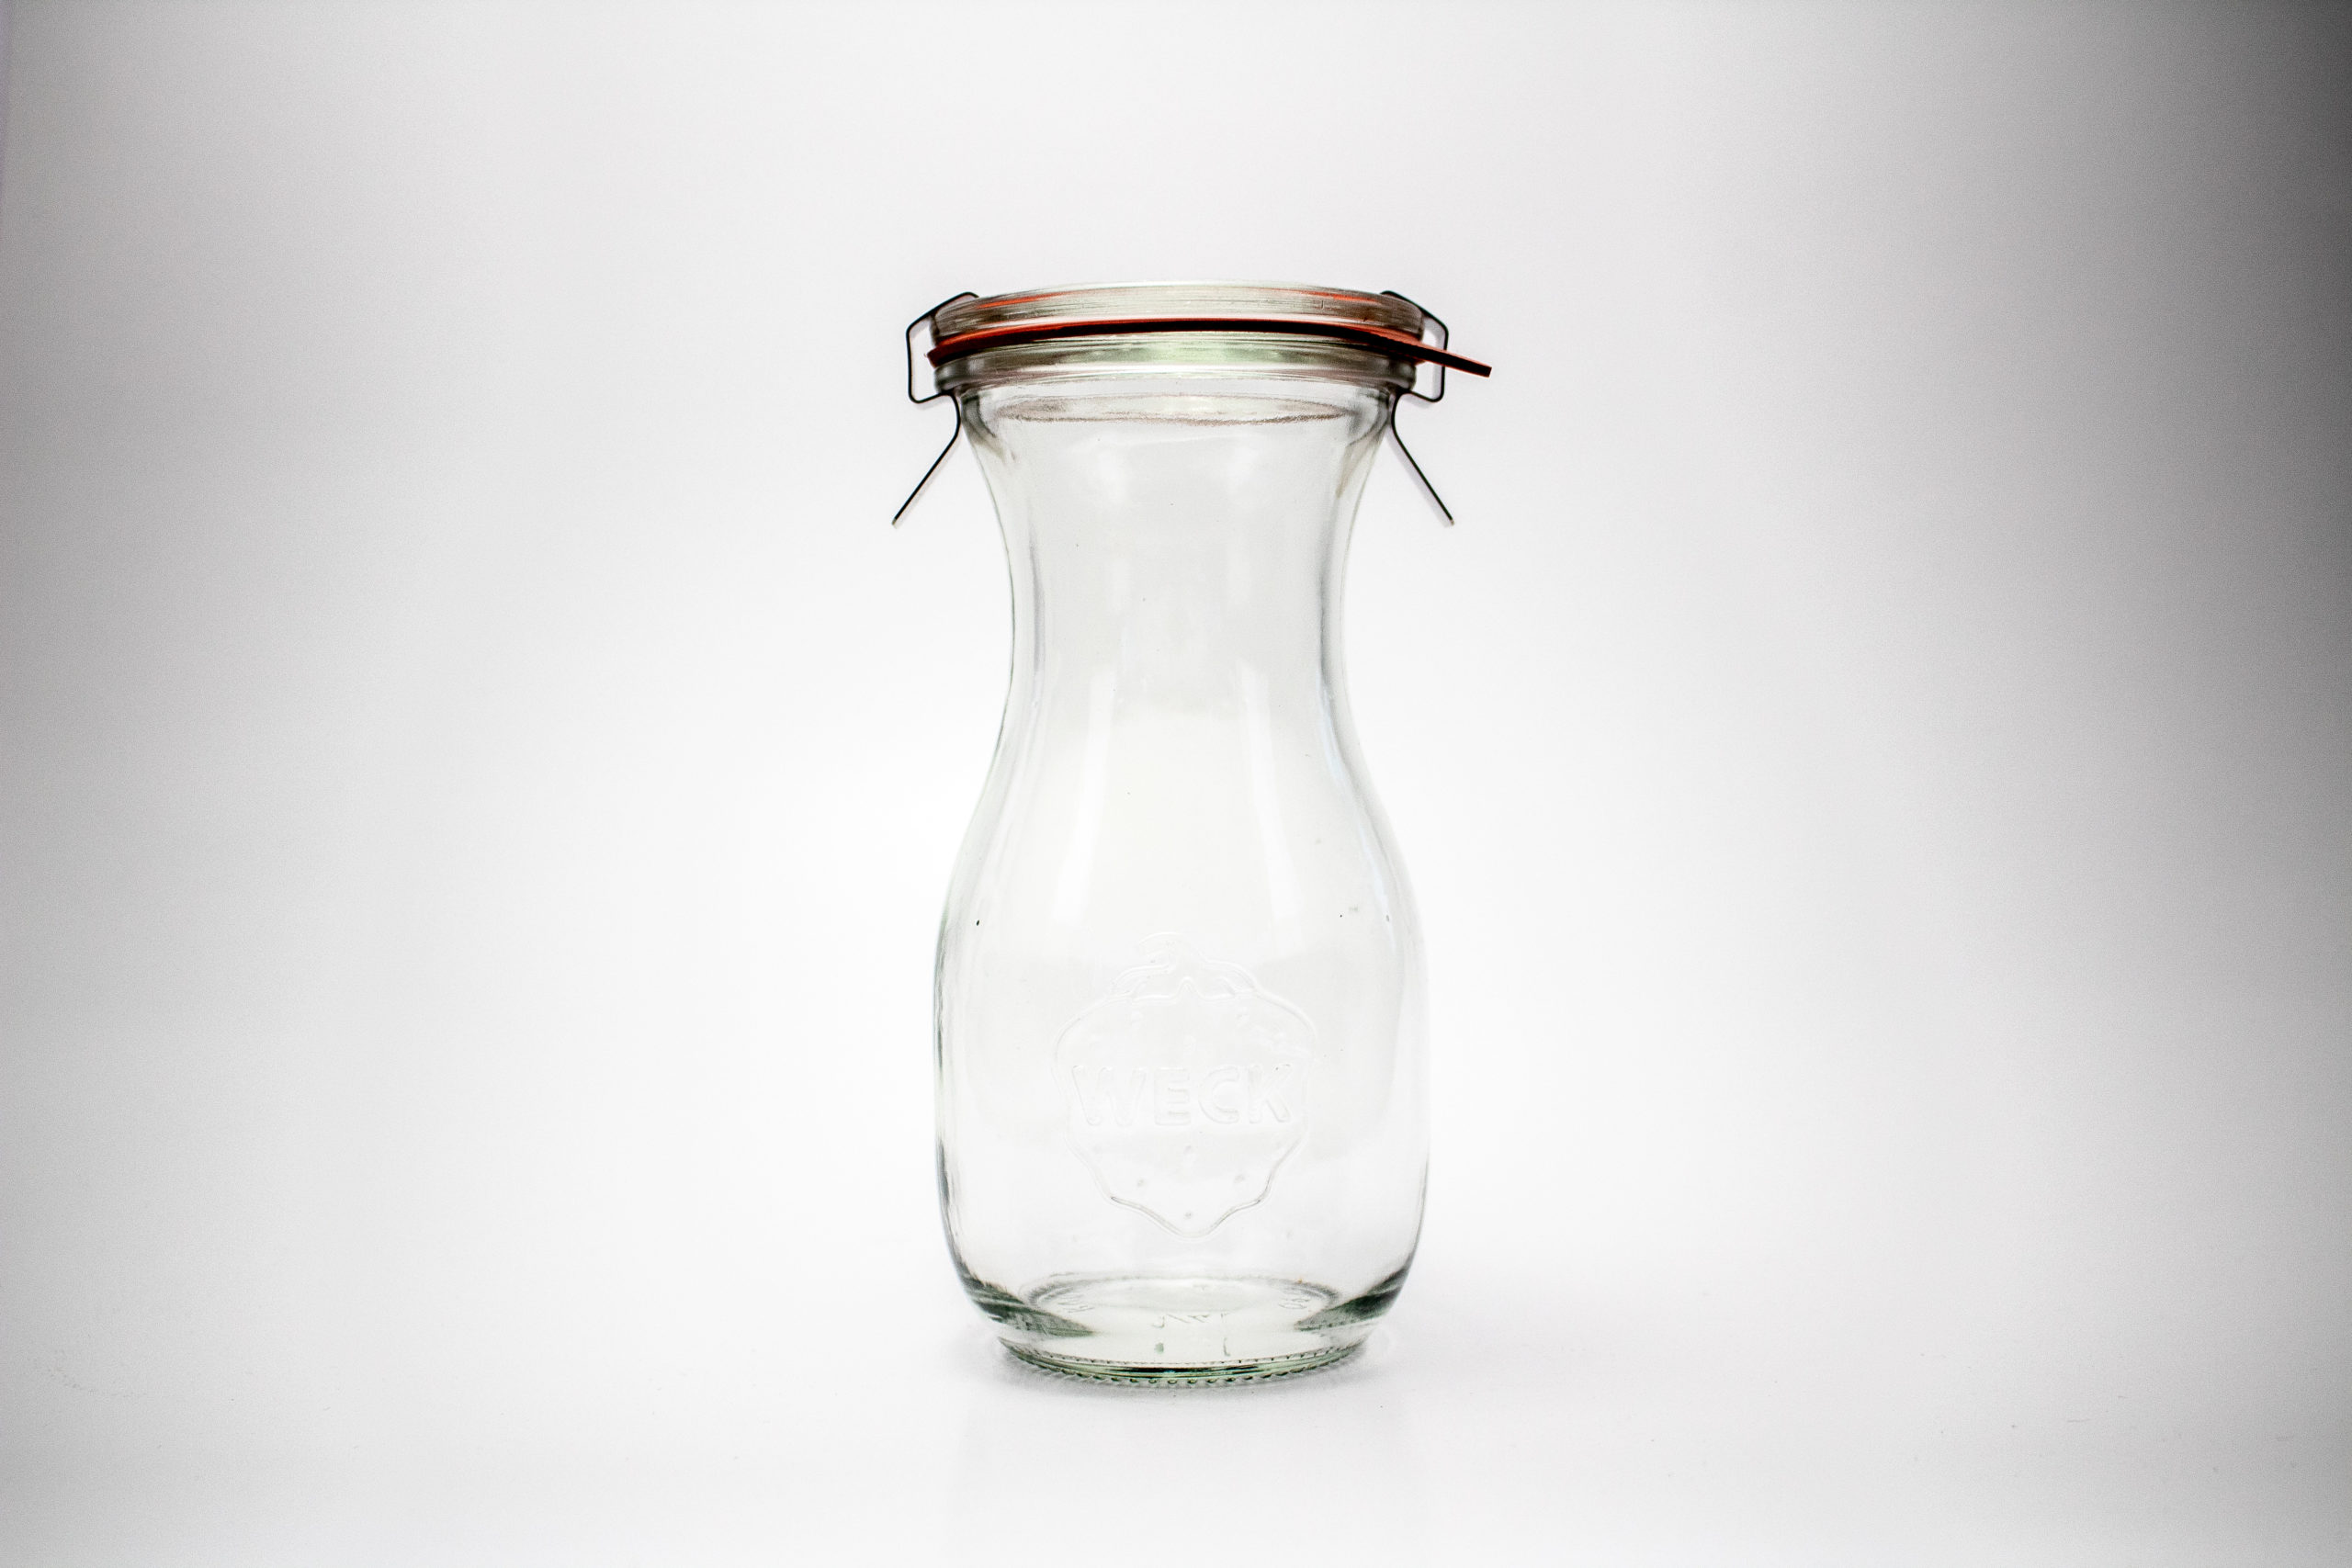 Store Menu — Juice Jar